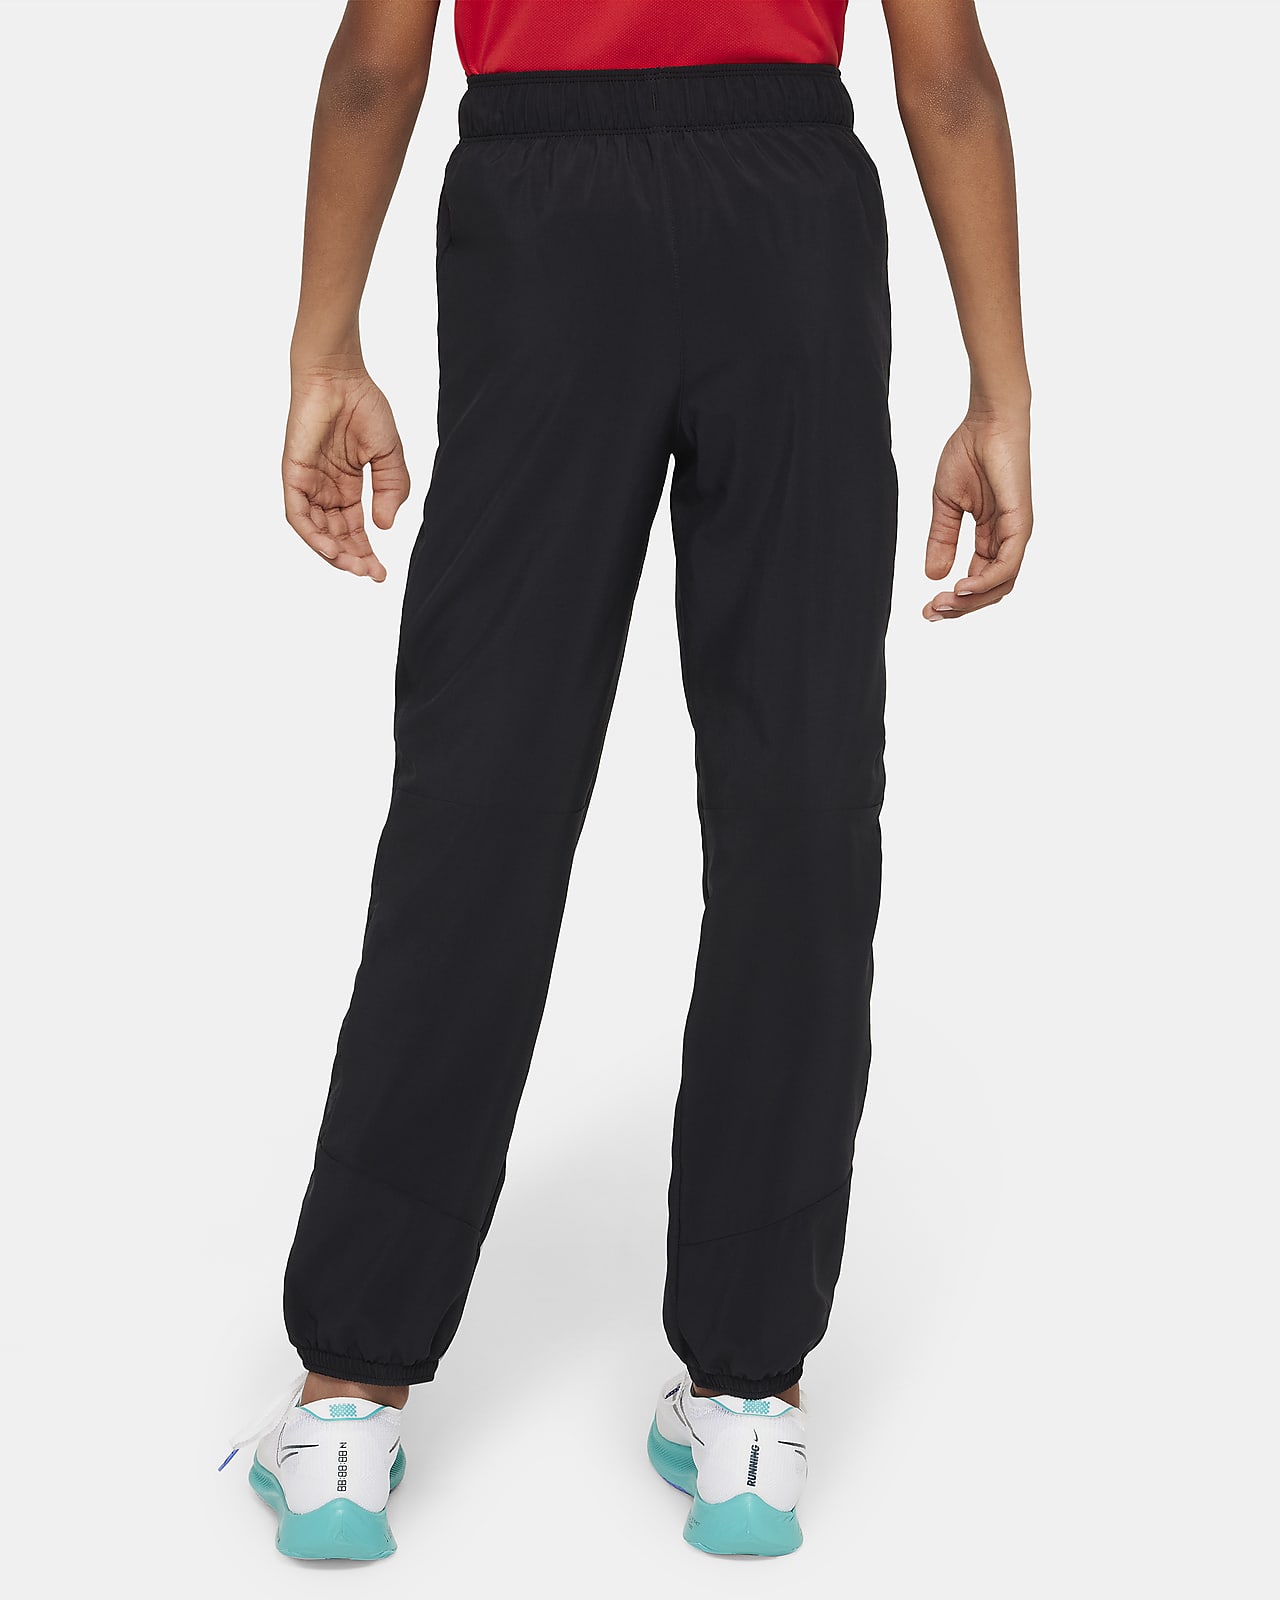 Nike Dri Fit Track Pants Navy Blue Zip Pockets Mens Snap Cuffs Size XL |  eBay